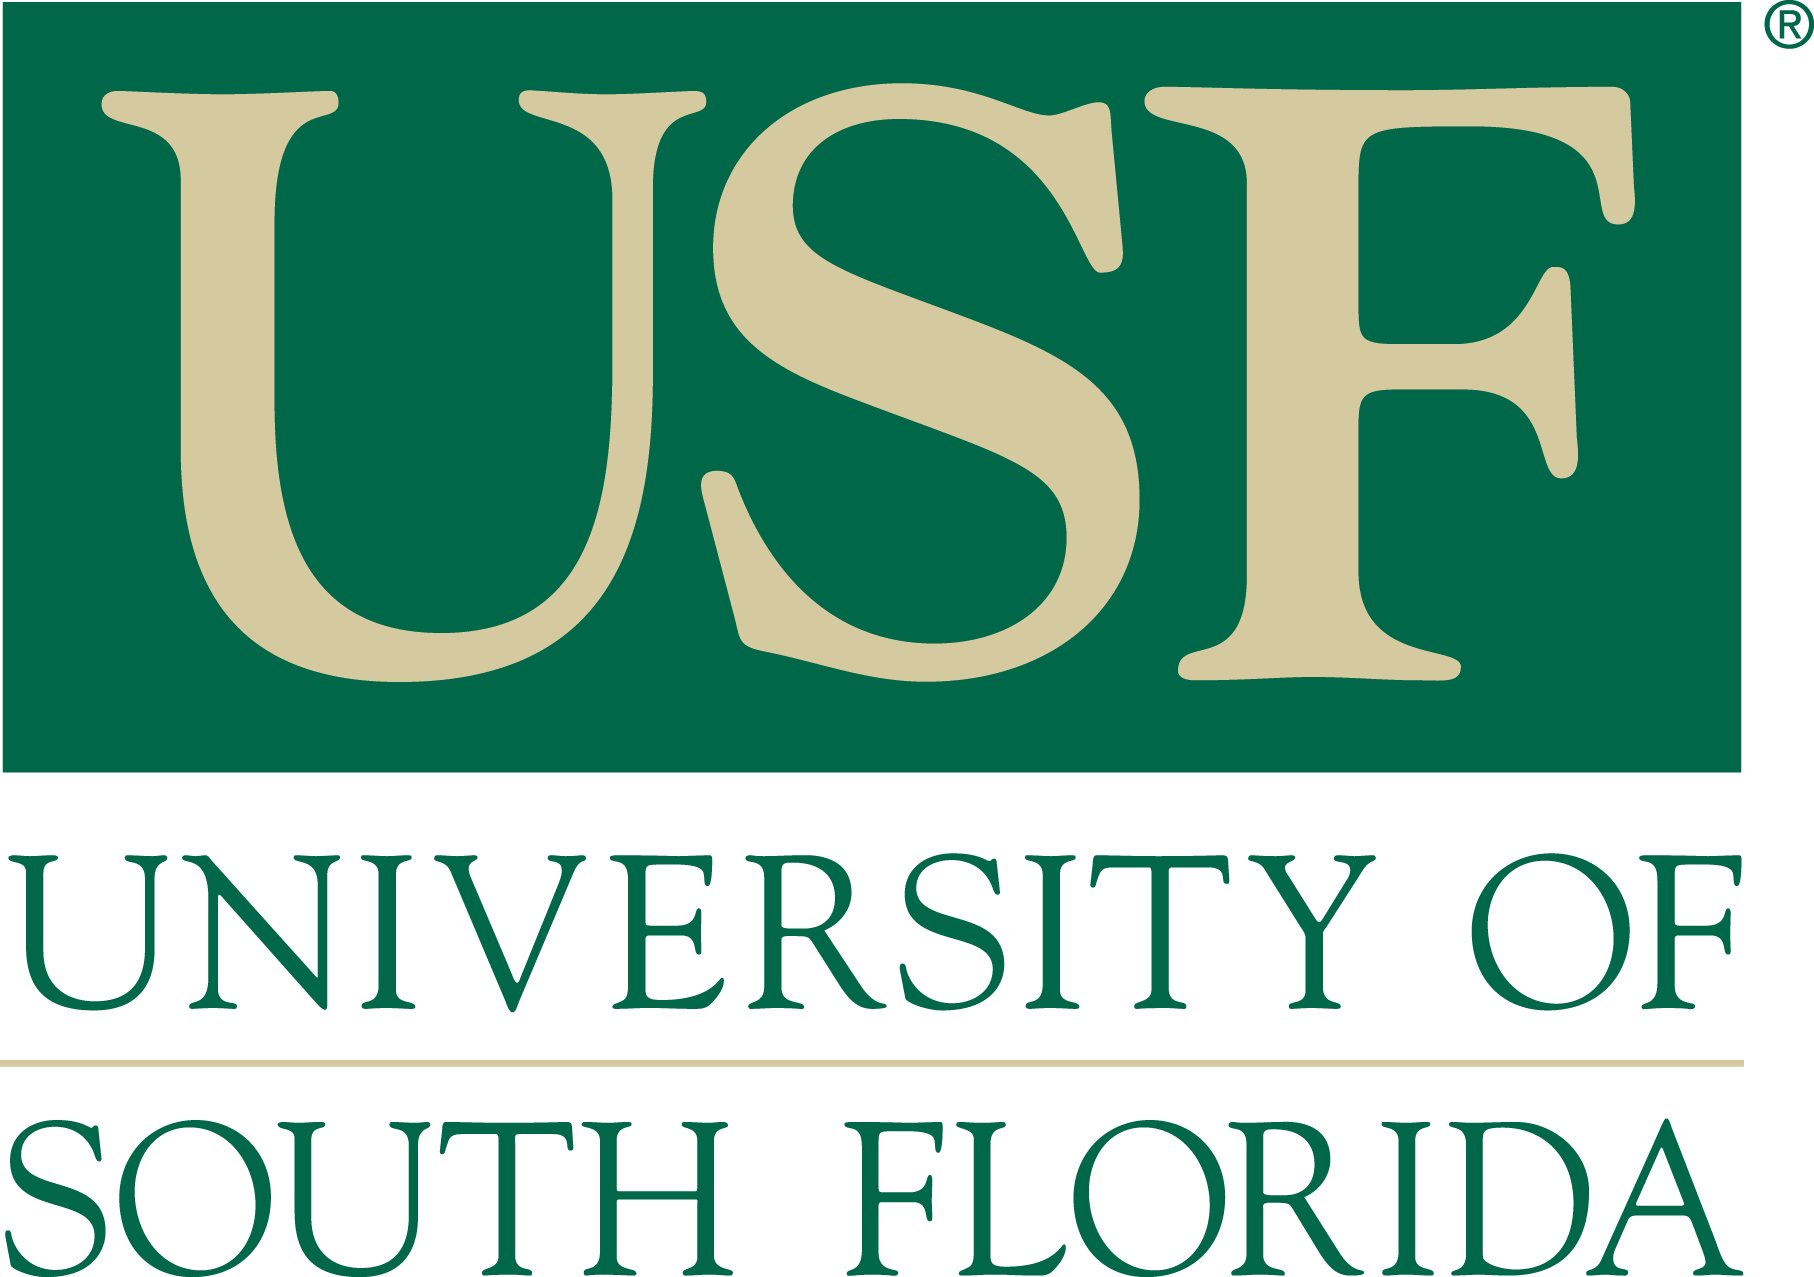 University of Southern Florida